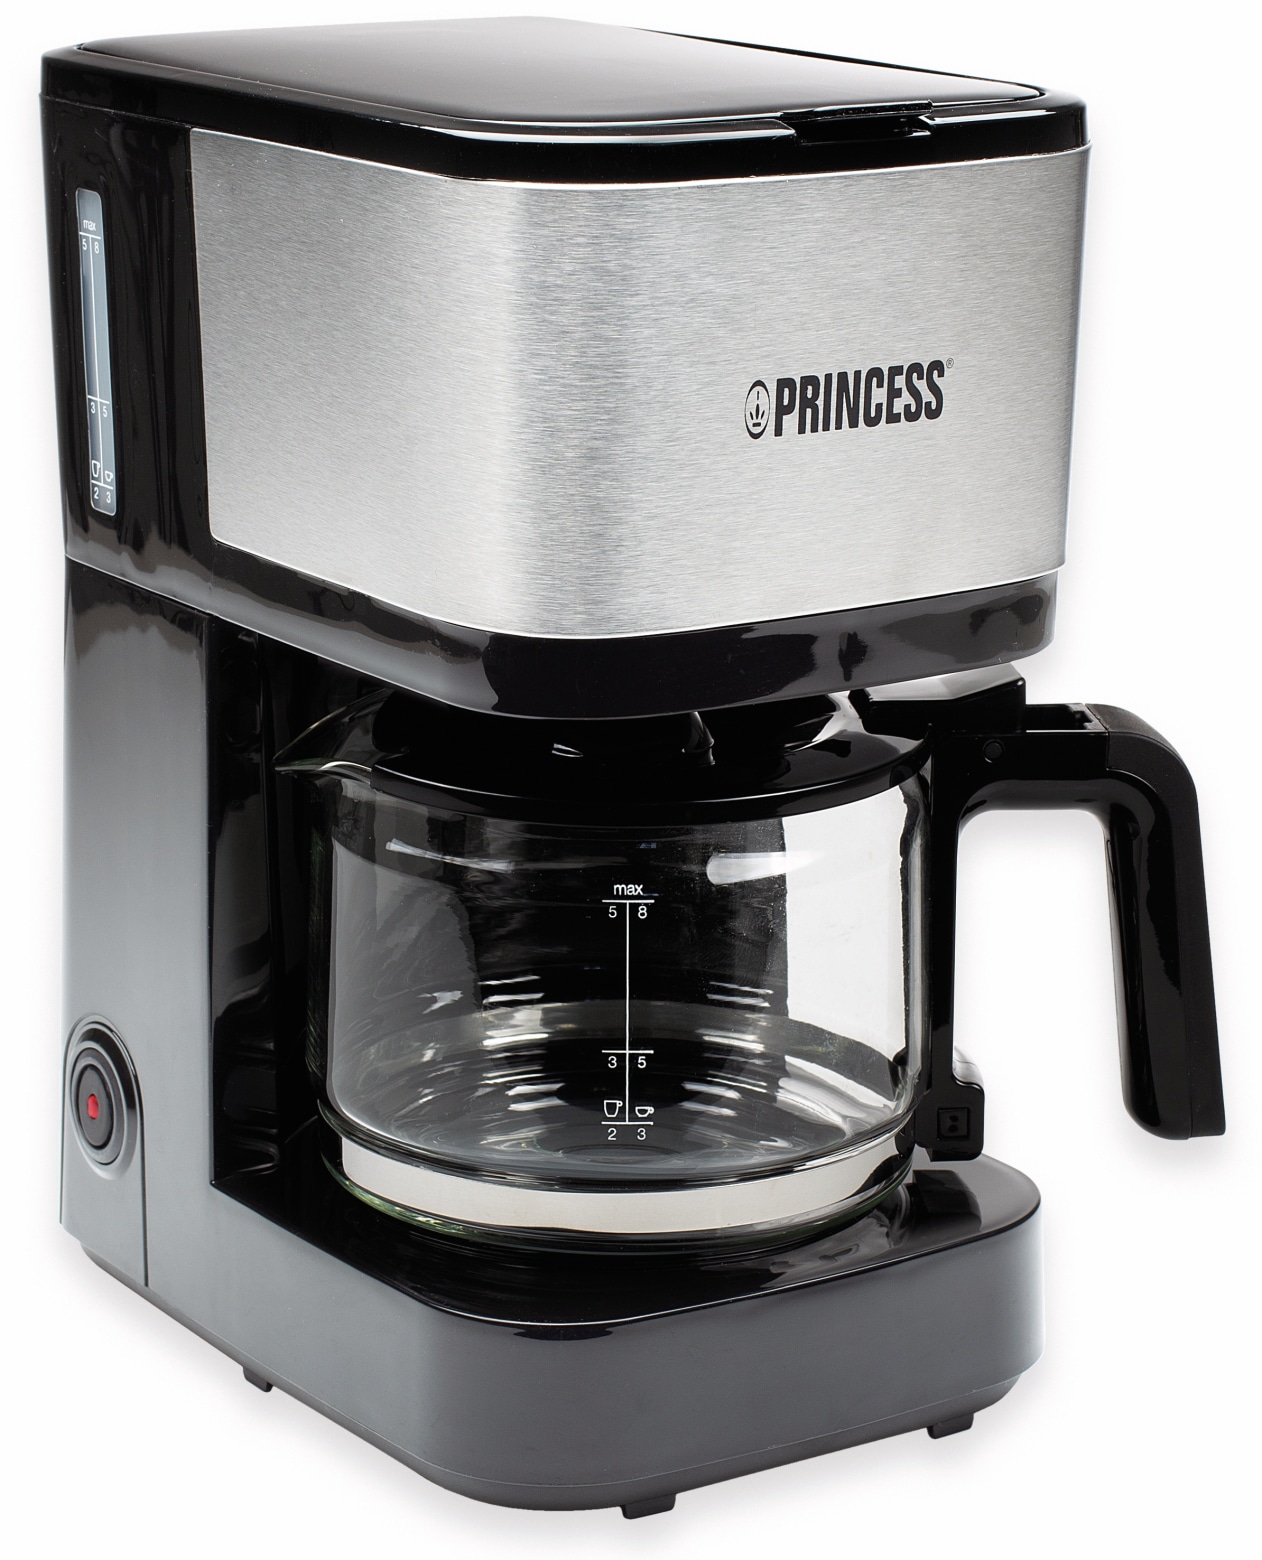 PRINCESS Kaffeemaschine 246030, 600 W, 0,75 L